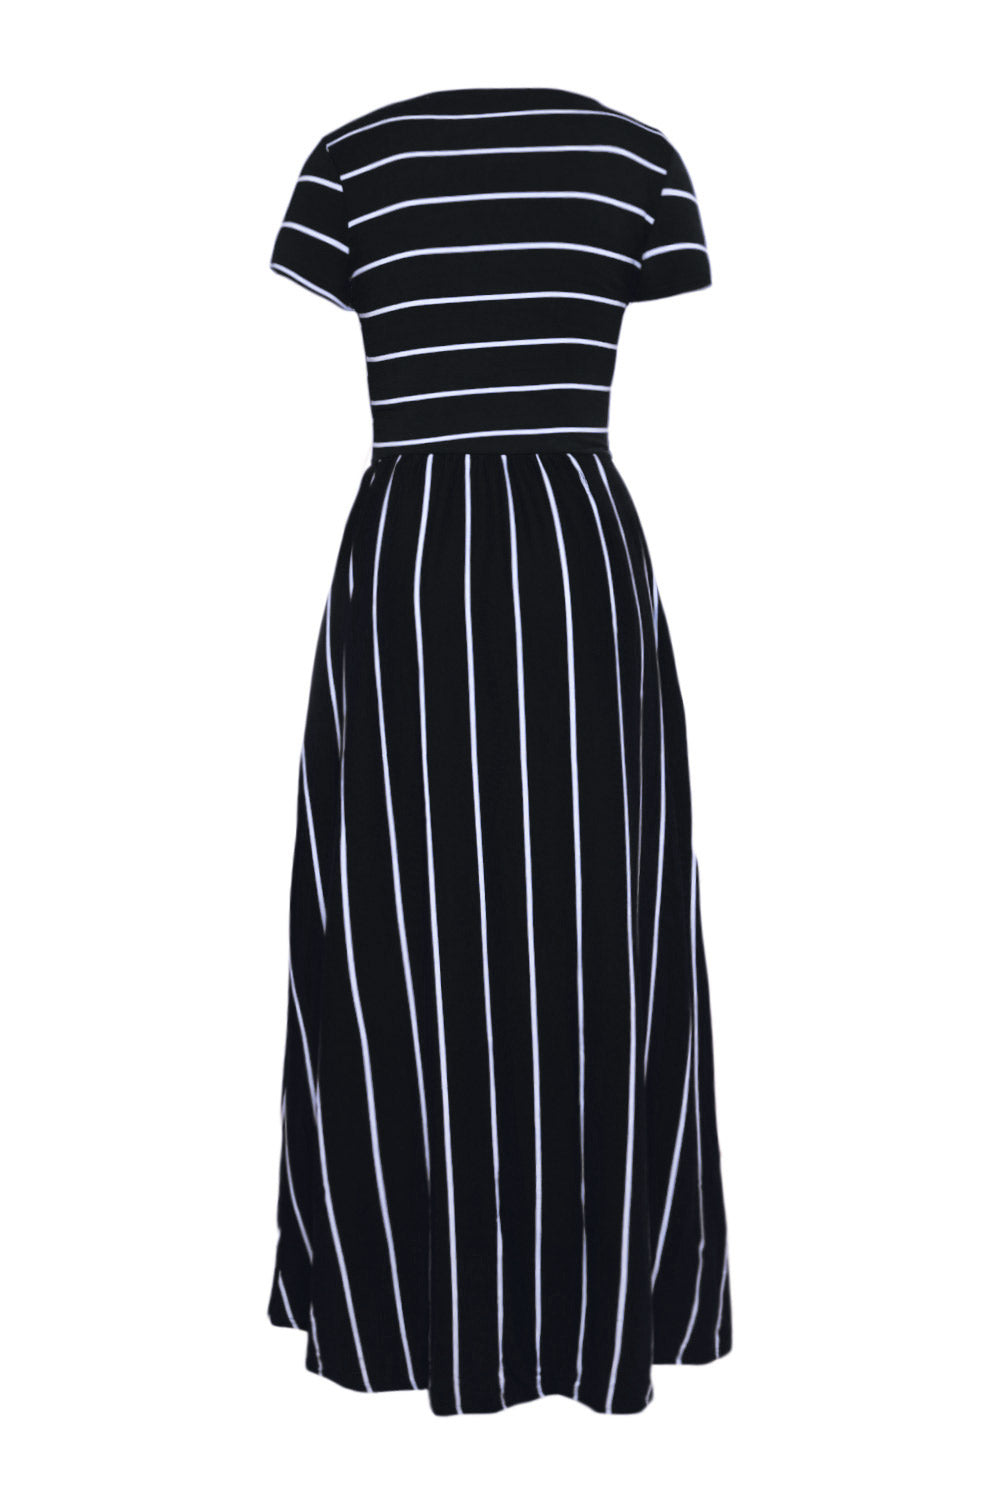 White Black Striped Short Sleeve Maxi Dress